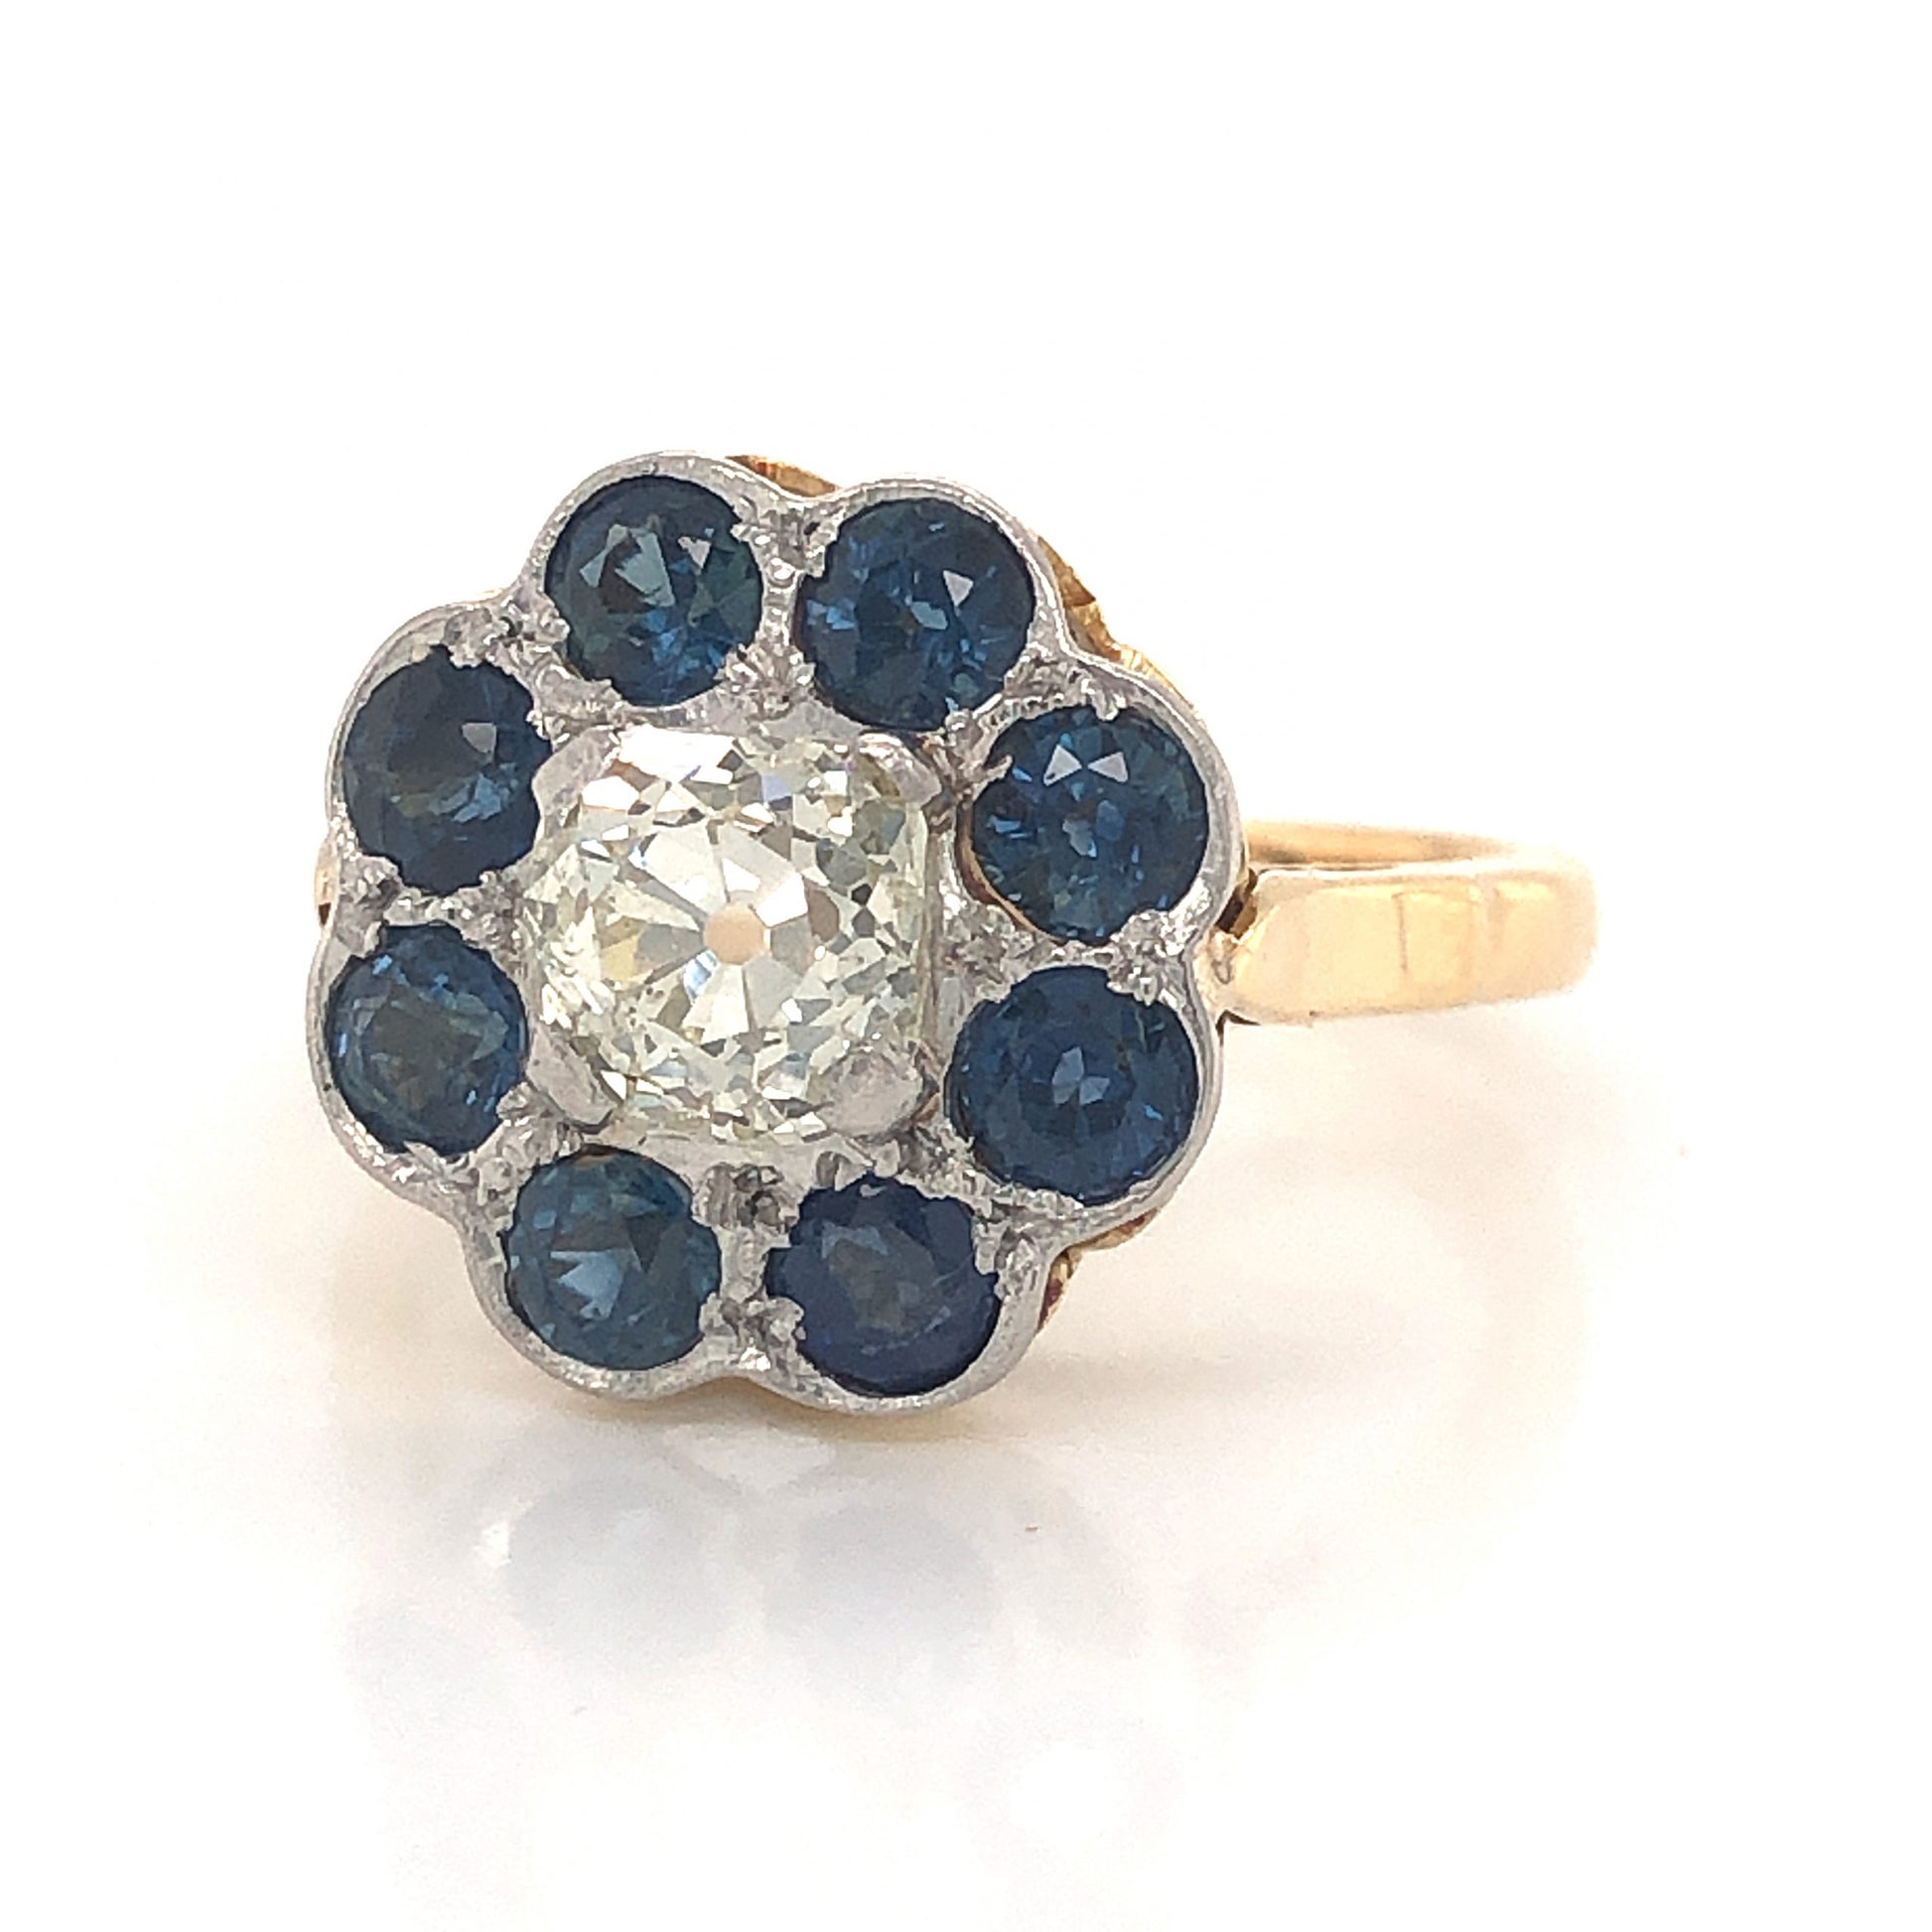 Victorian Sapphire Halo Diamond Engagement Ring in 18k & PlatinumComposition: Platinum/18 Karat Yellow Gold Ring Size: 7.25 Total Diamond Weight: .91ct Total Gram Weight: 5.3 g Inscription: 18CT PLAT
      